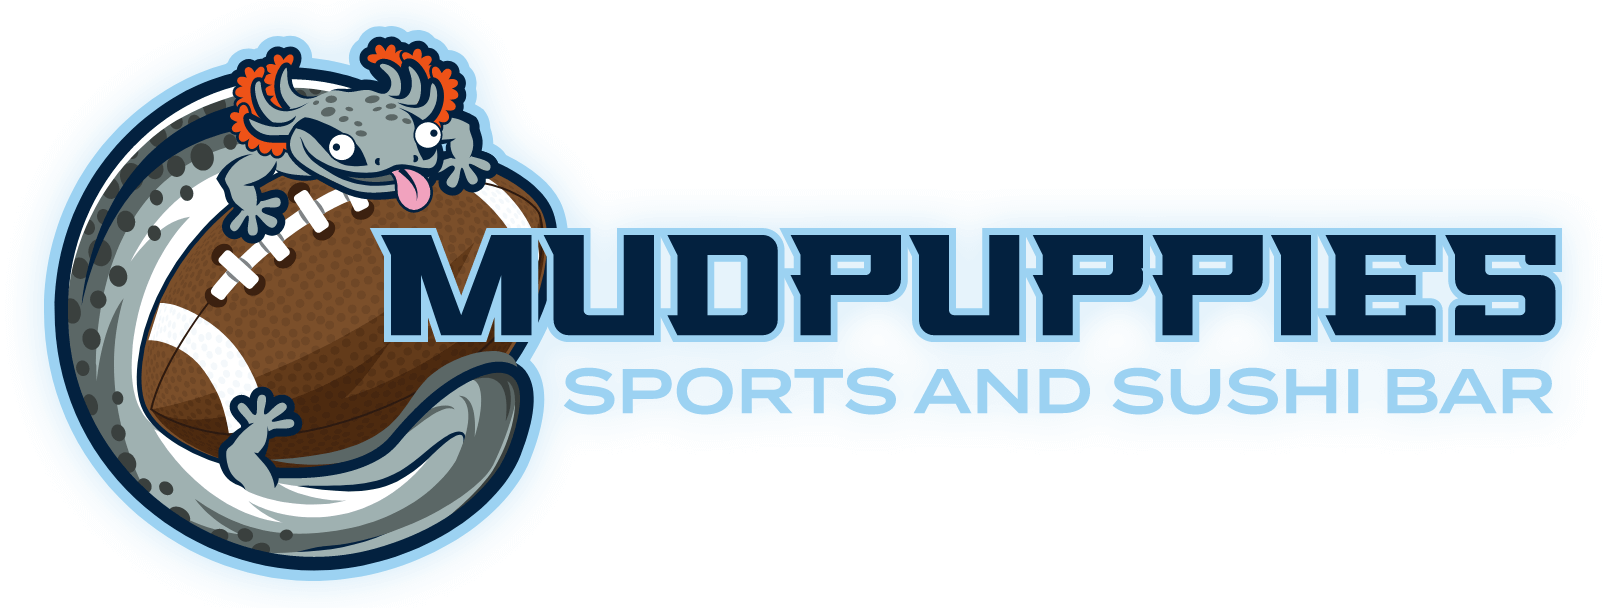 Mudpuppies Sports and Sushi Bar logo scroll